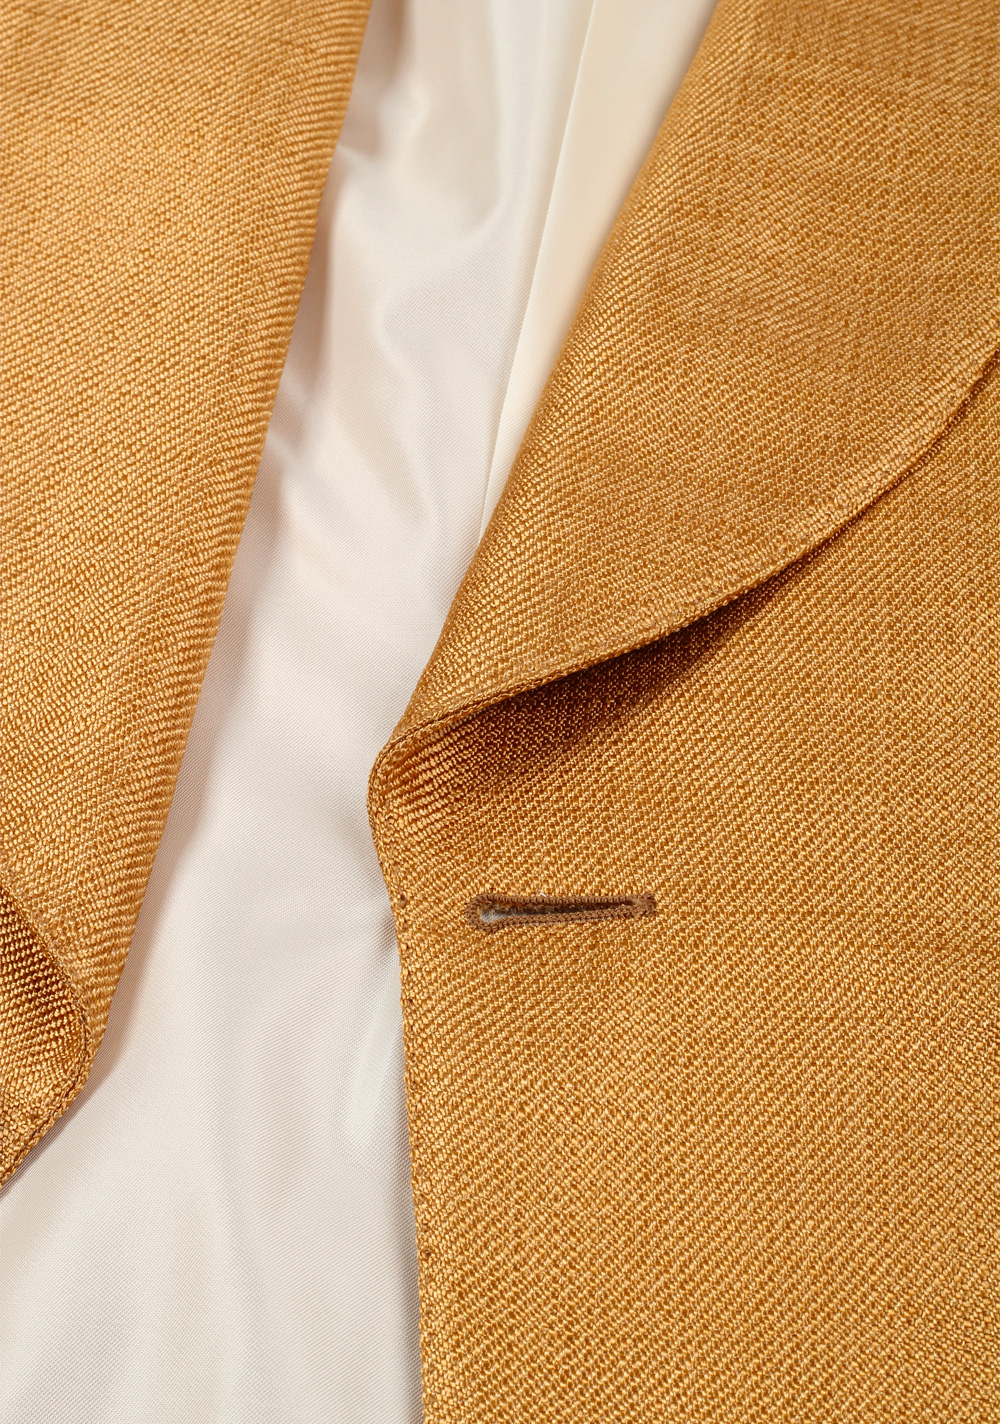 TOM FORD Shelton Gold Sport Coat Tuxedo Dinner Jacket Size Size 48 / 38R U.S. | Costume Limité